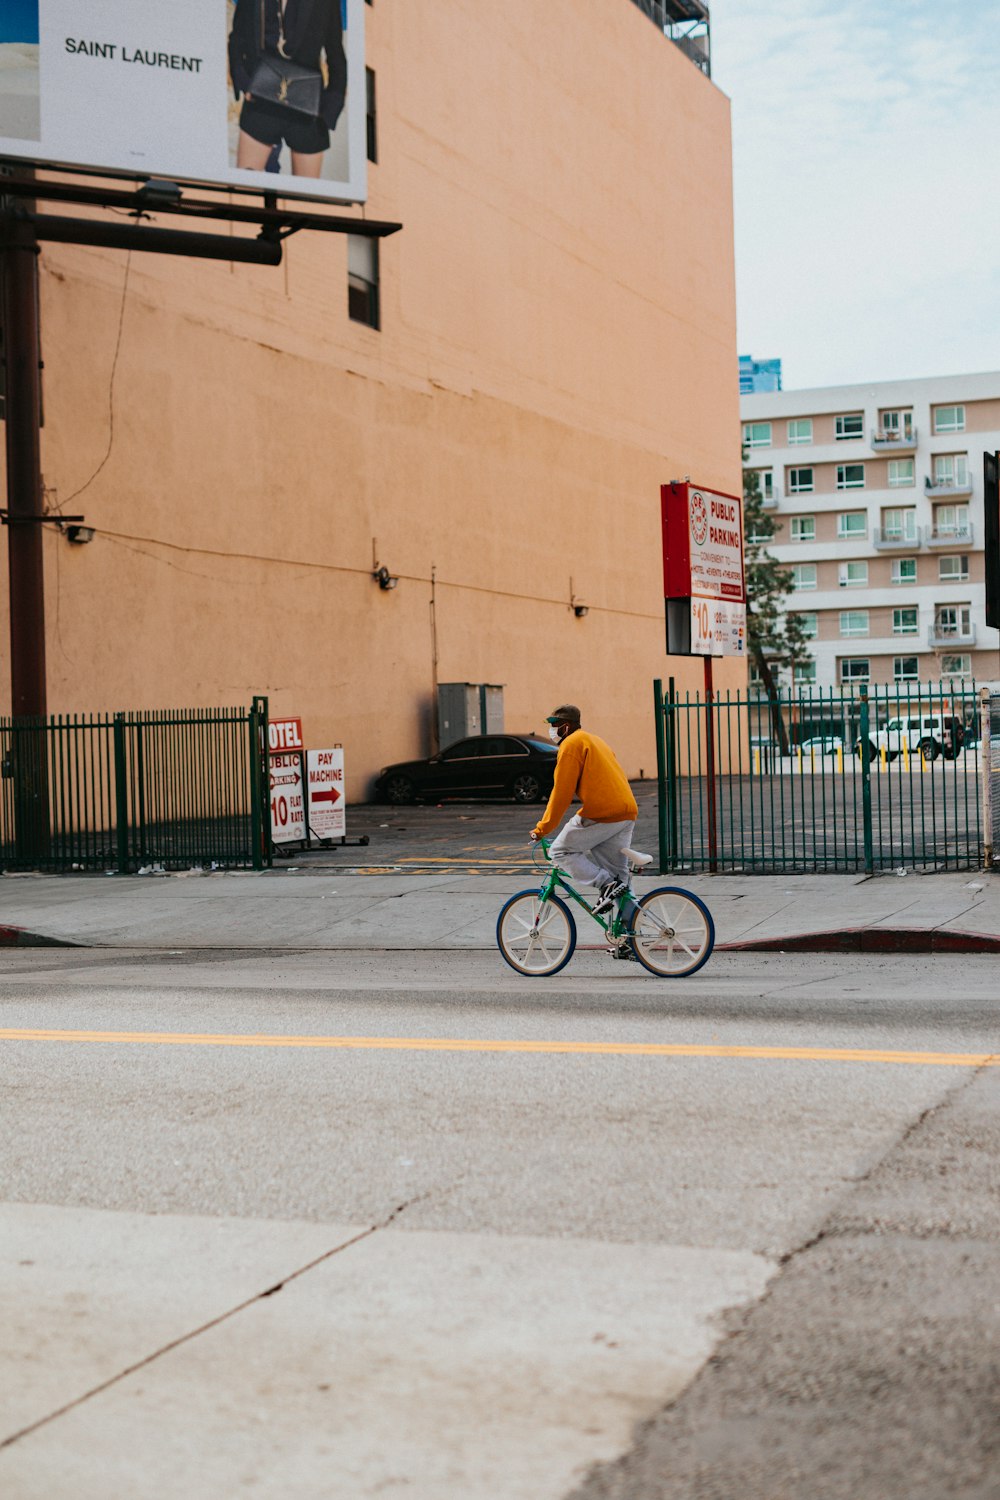 man in yellow shirt riding bicycle on road during daytime